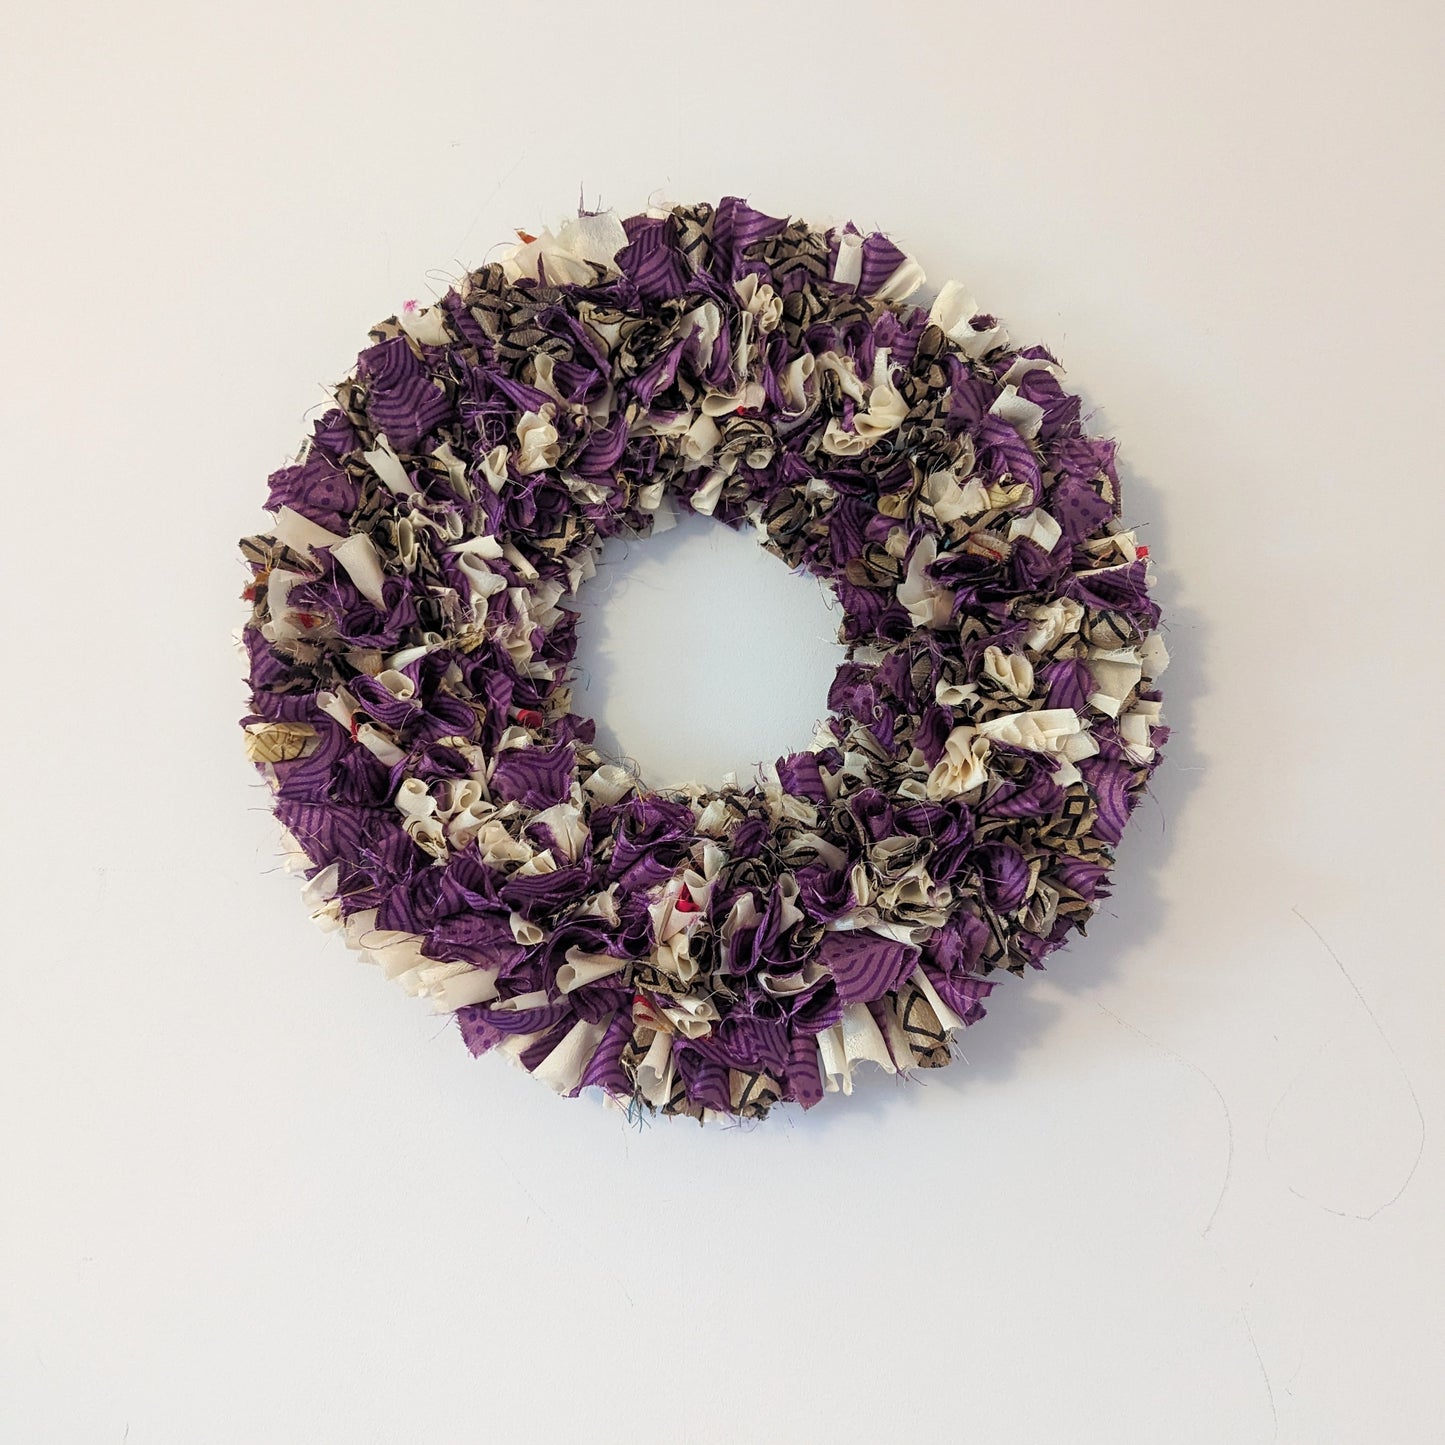 Handmade Upcycled Sari Rag Wreath